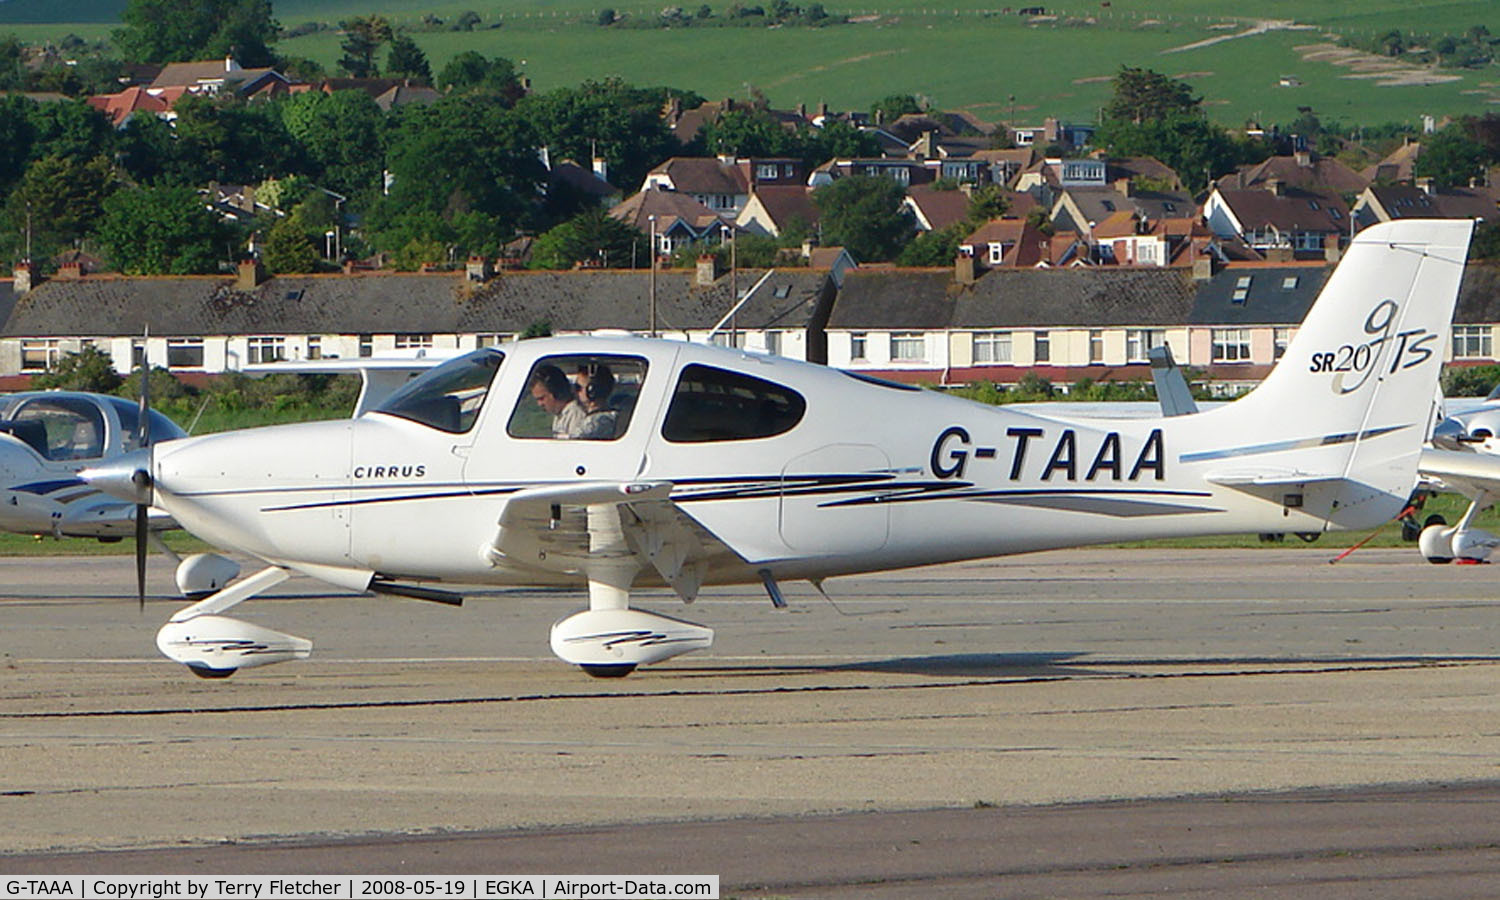 G-TAAA, 2005 Cirrus SR20 GTS C/N 1562, A pleasant May evening at Shoreham Airport , Sussex , UK